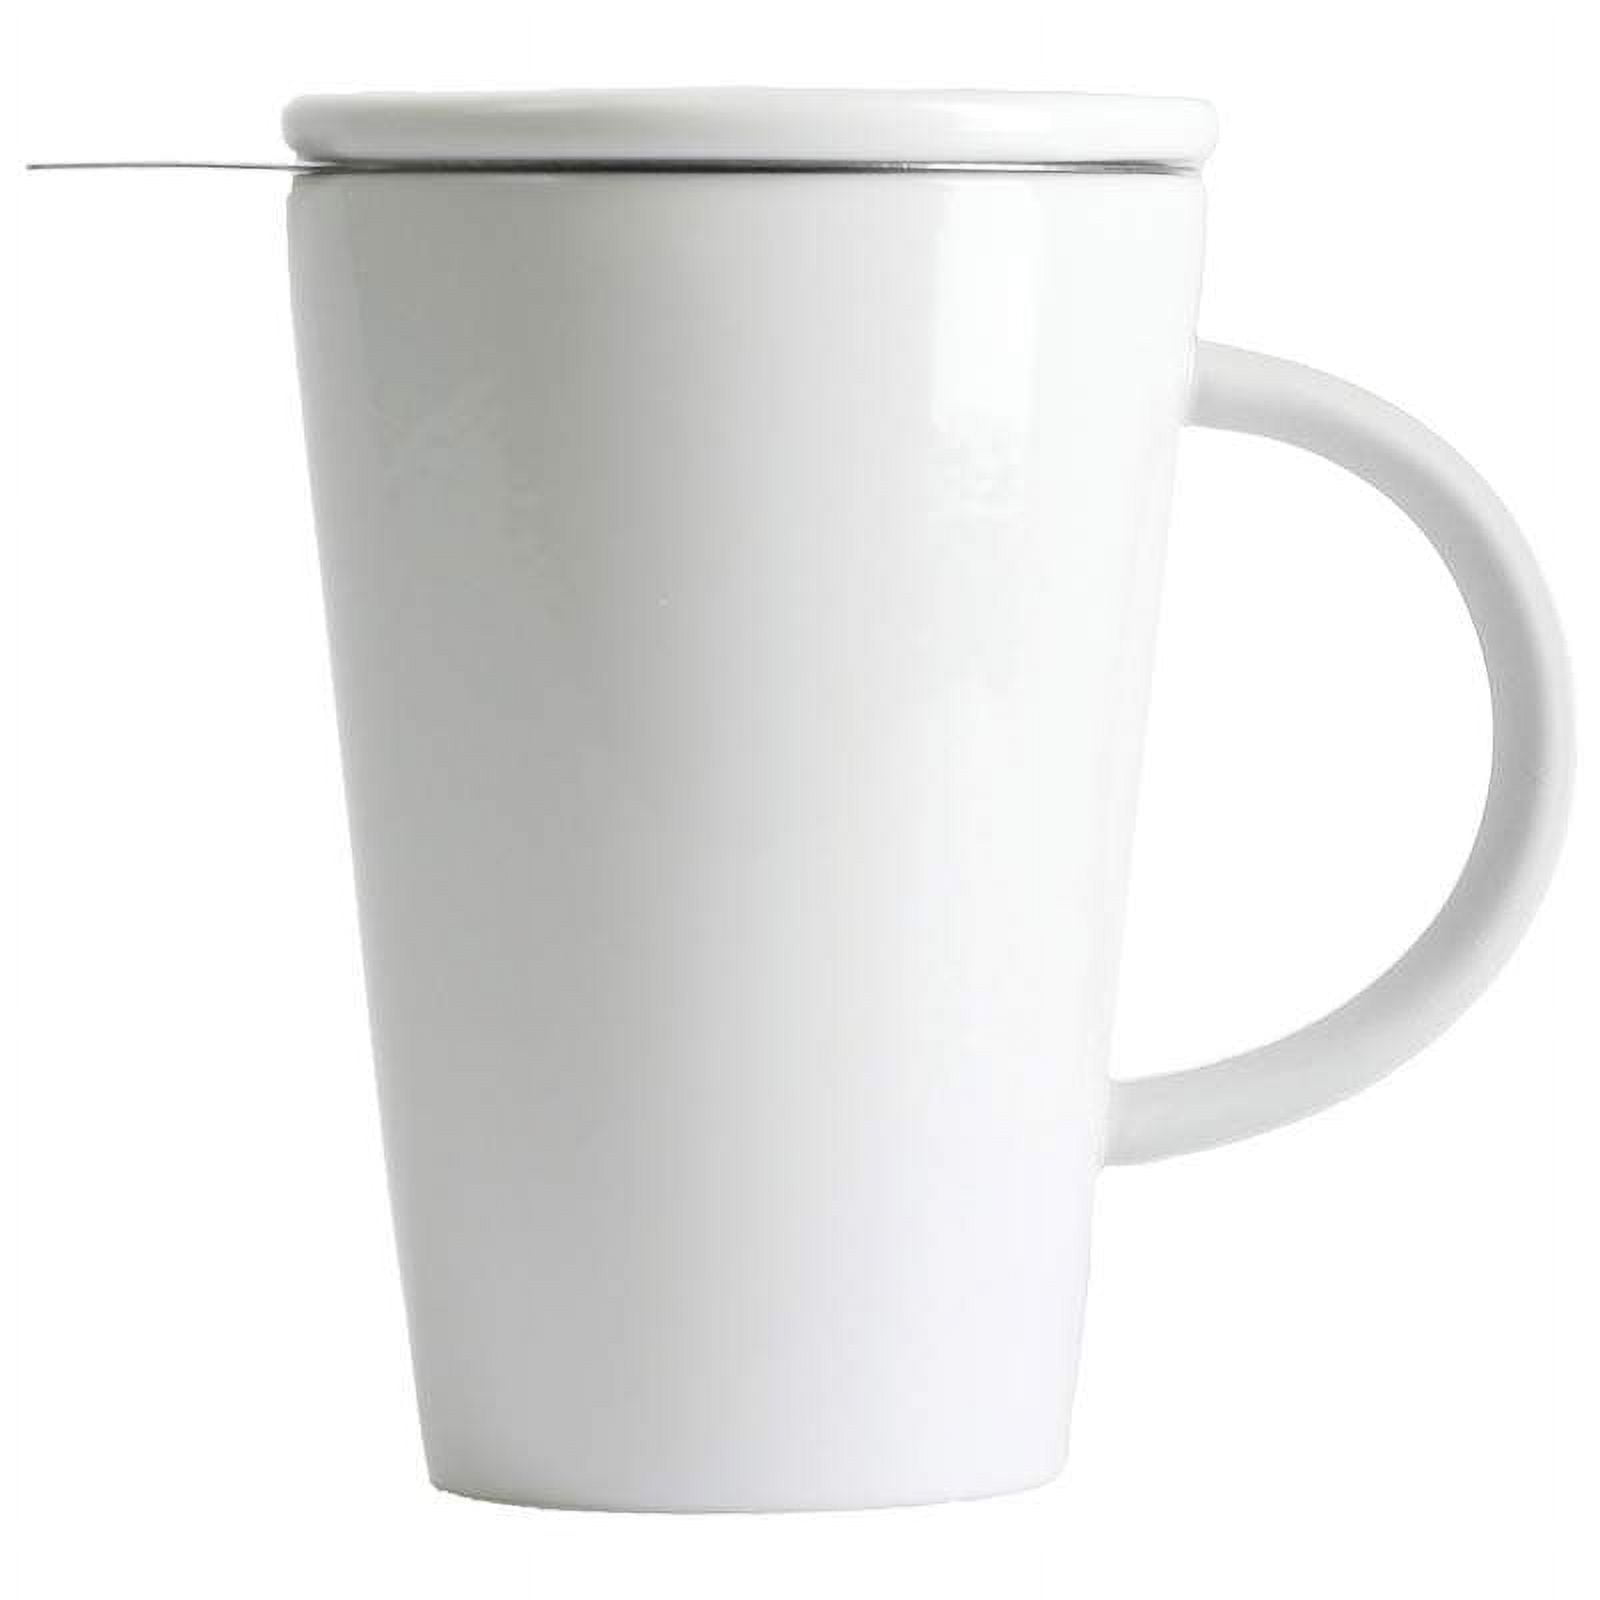 Kteast 13.5 Oz Porcelain Tea Steeping Mug